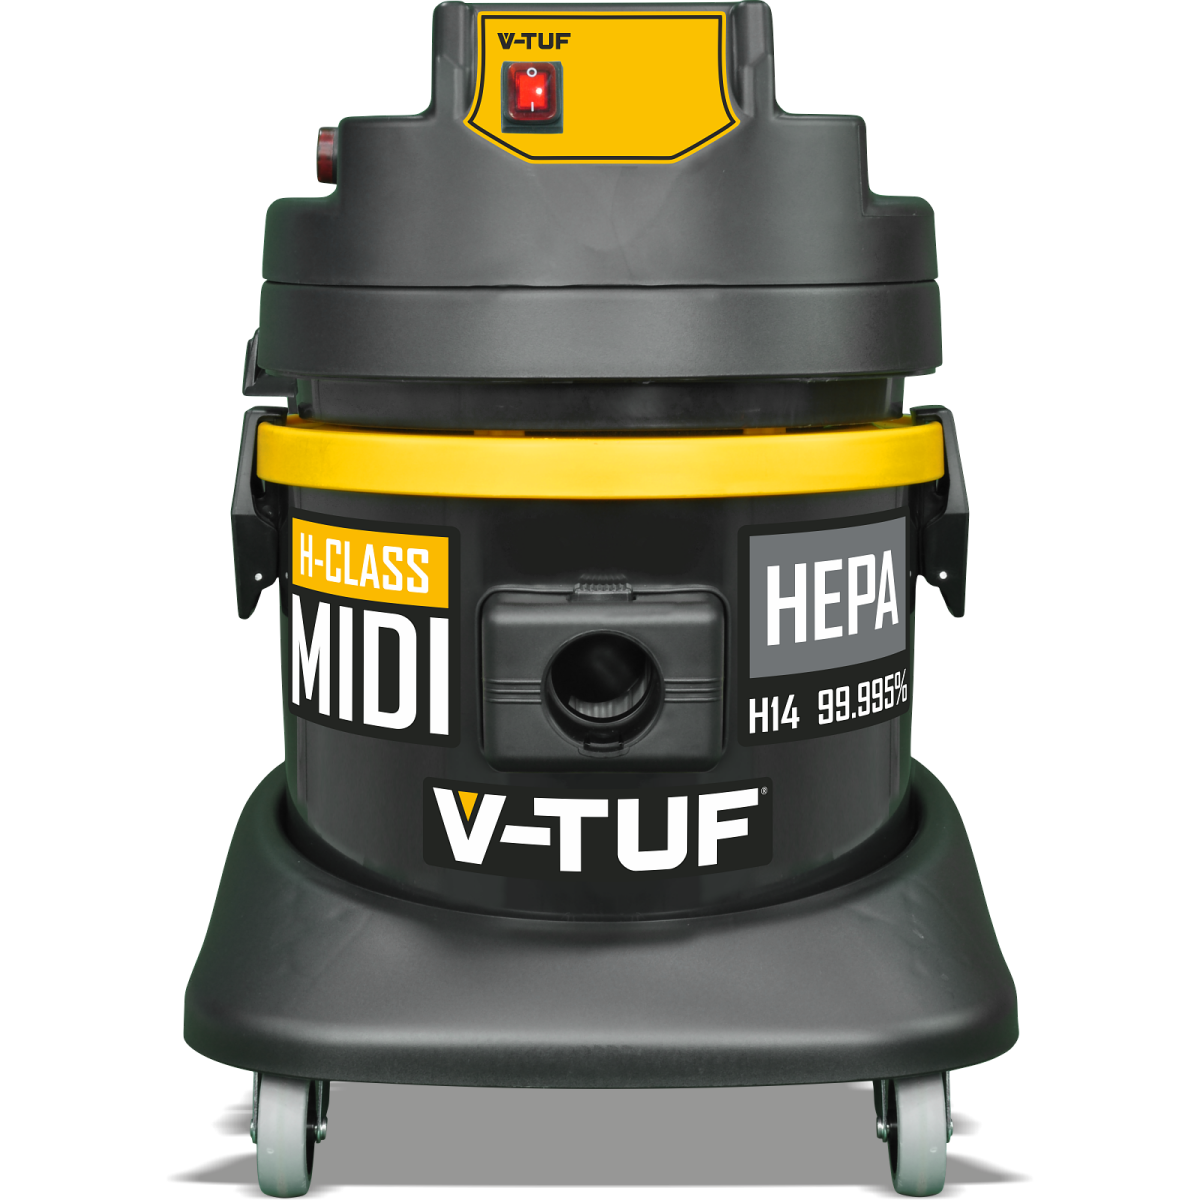 V-Tuf MidiH110 110V 1400w H Class 21L Dust Extraction Vacuum Cleaner 